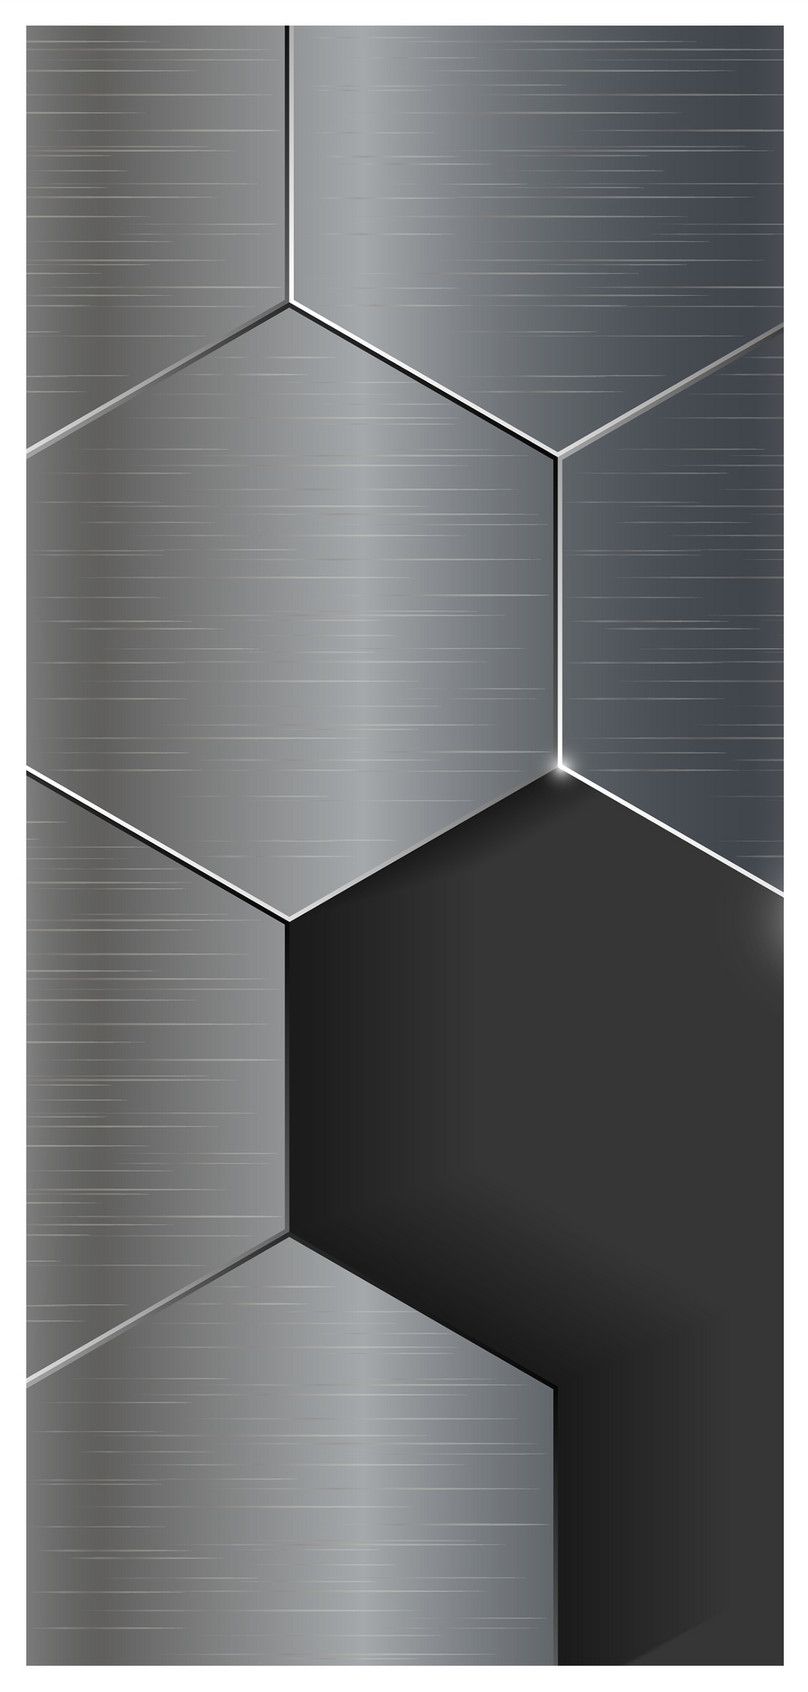 hexagonal metal pattern mobile phone wallpaper background image